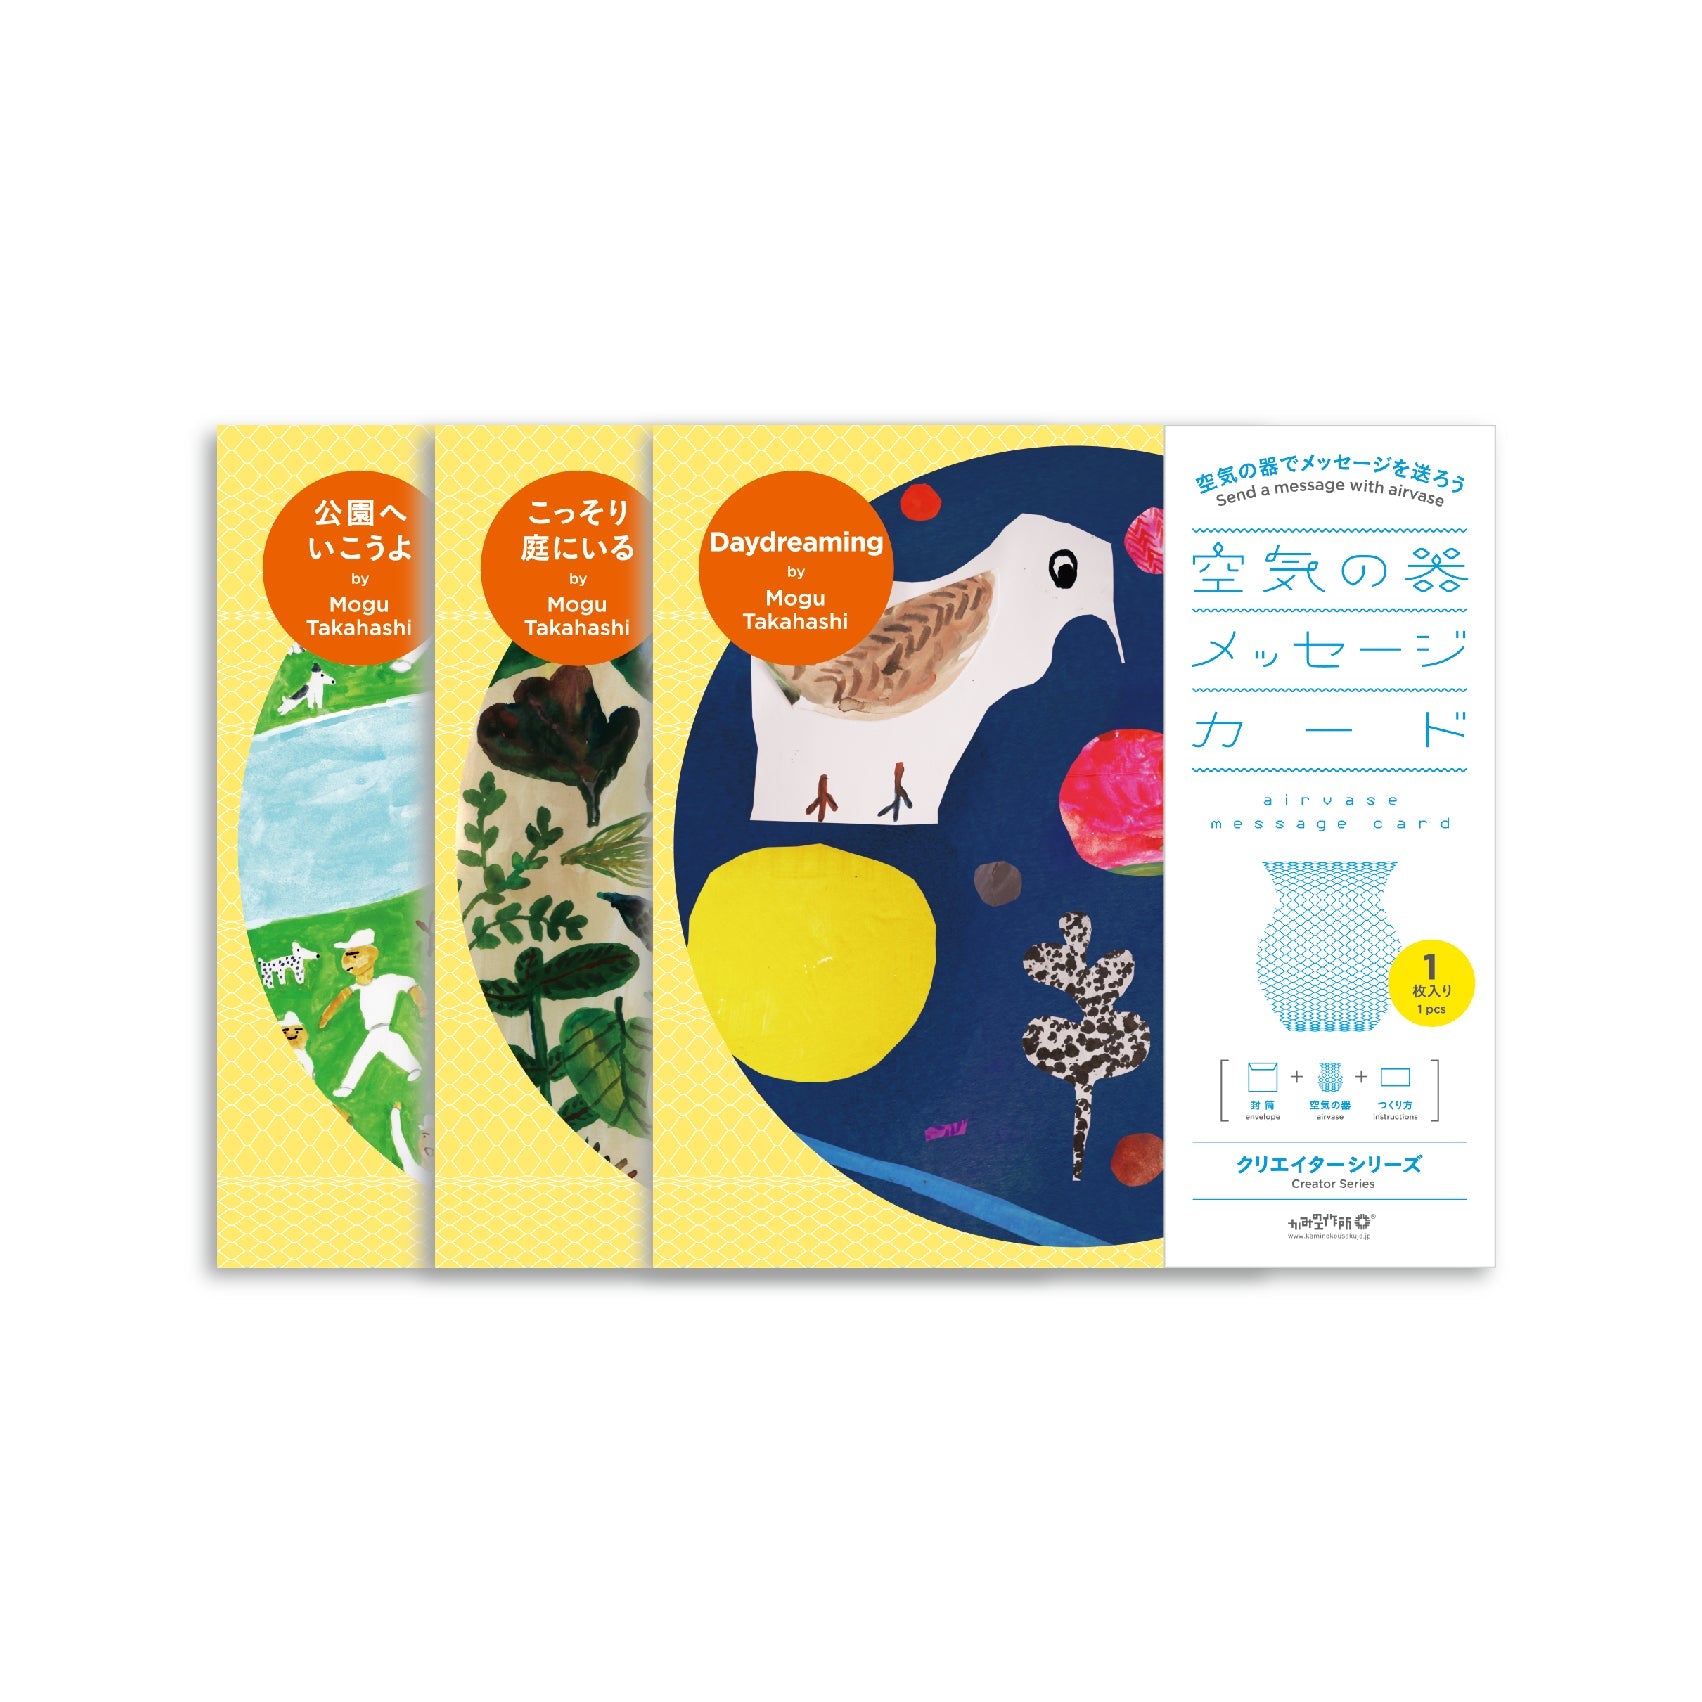 airvase Message Card Creator Series by Mogu Takahashi